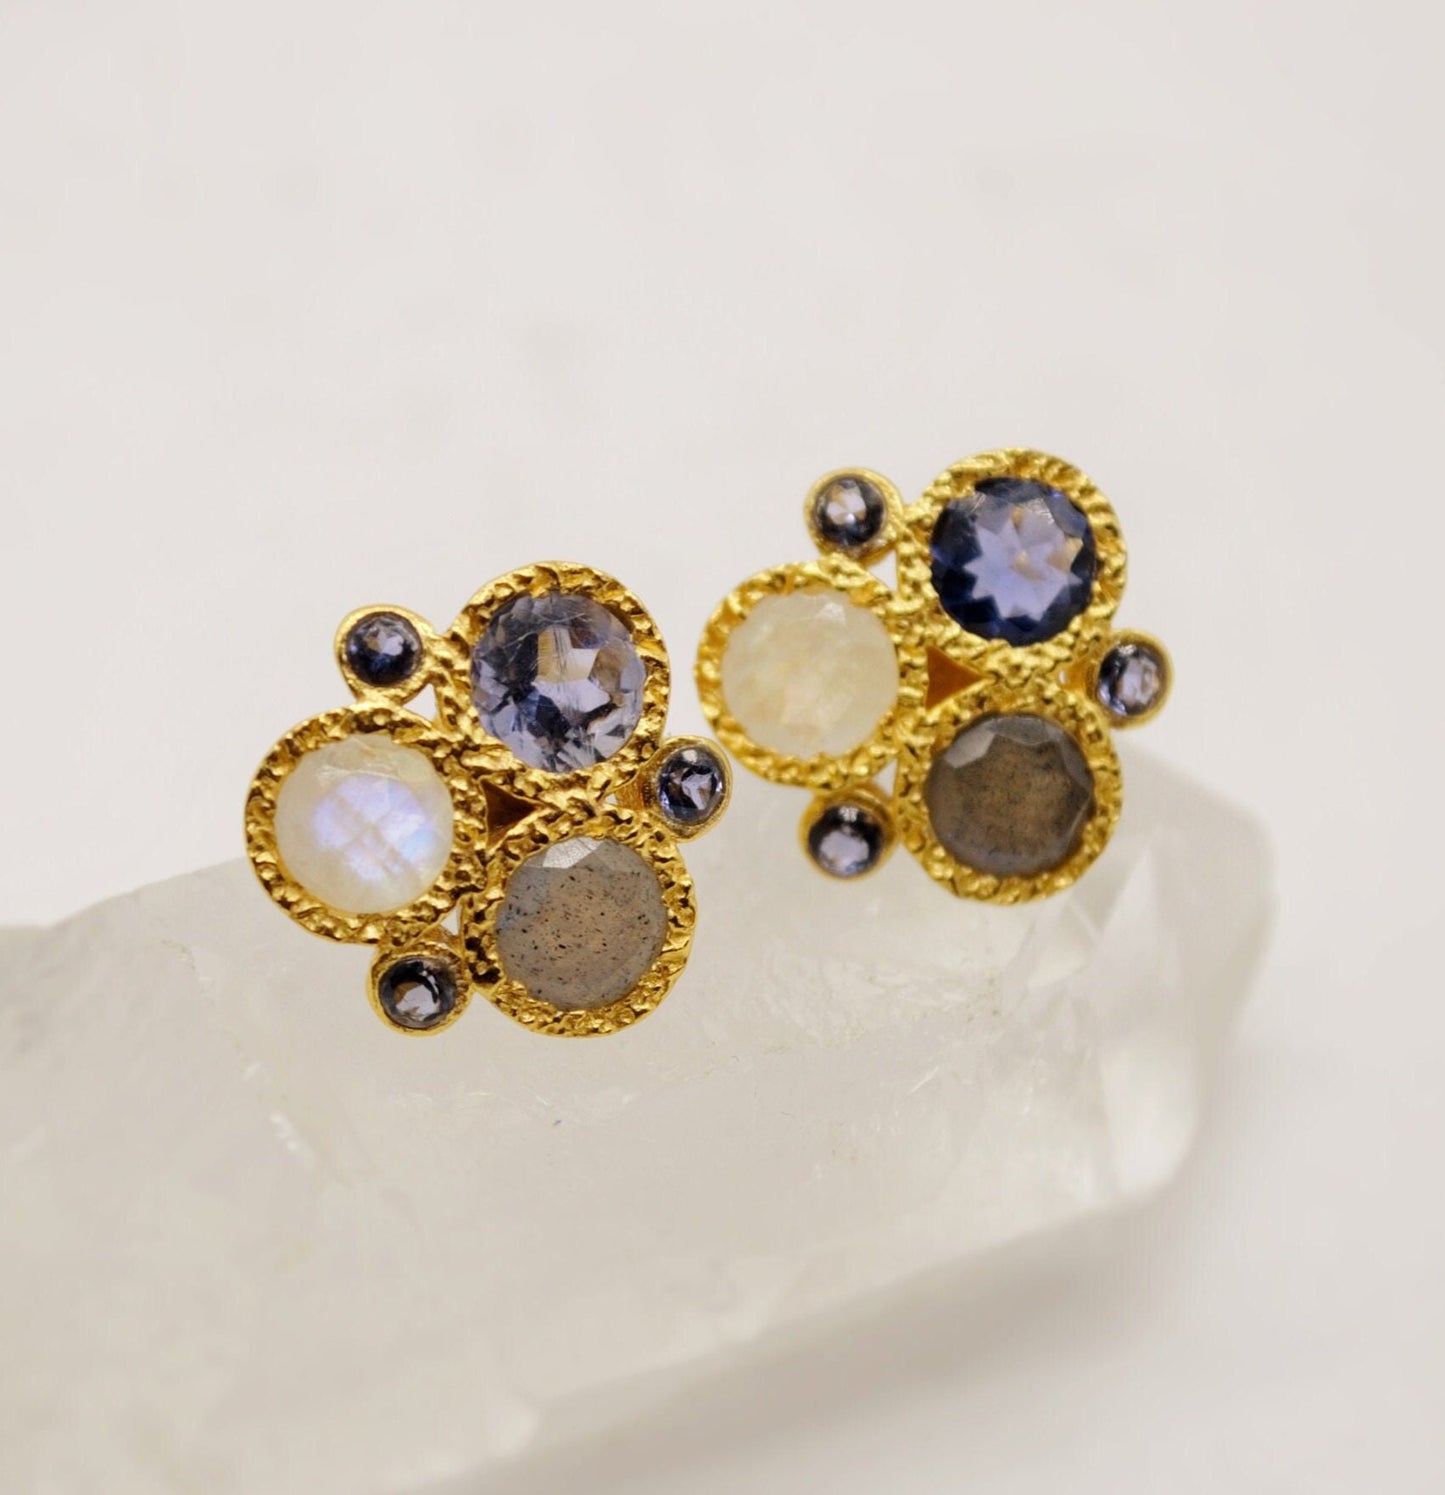 Labradorite, Moonstone, Amethyst Earrings, Gold Plated Sterling Silver Stud Earrings, Unique Birthstone Gemstone Earrings